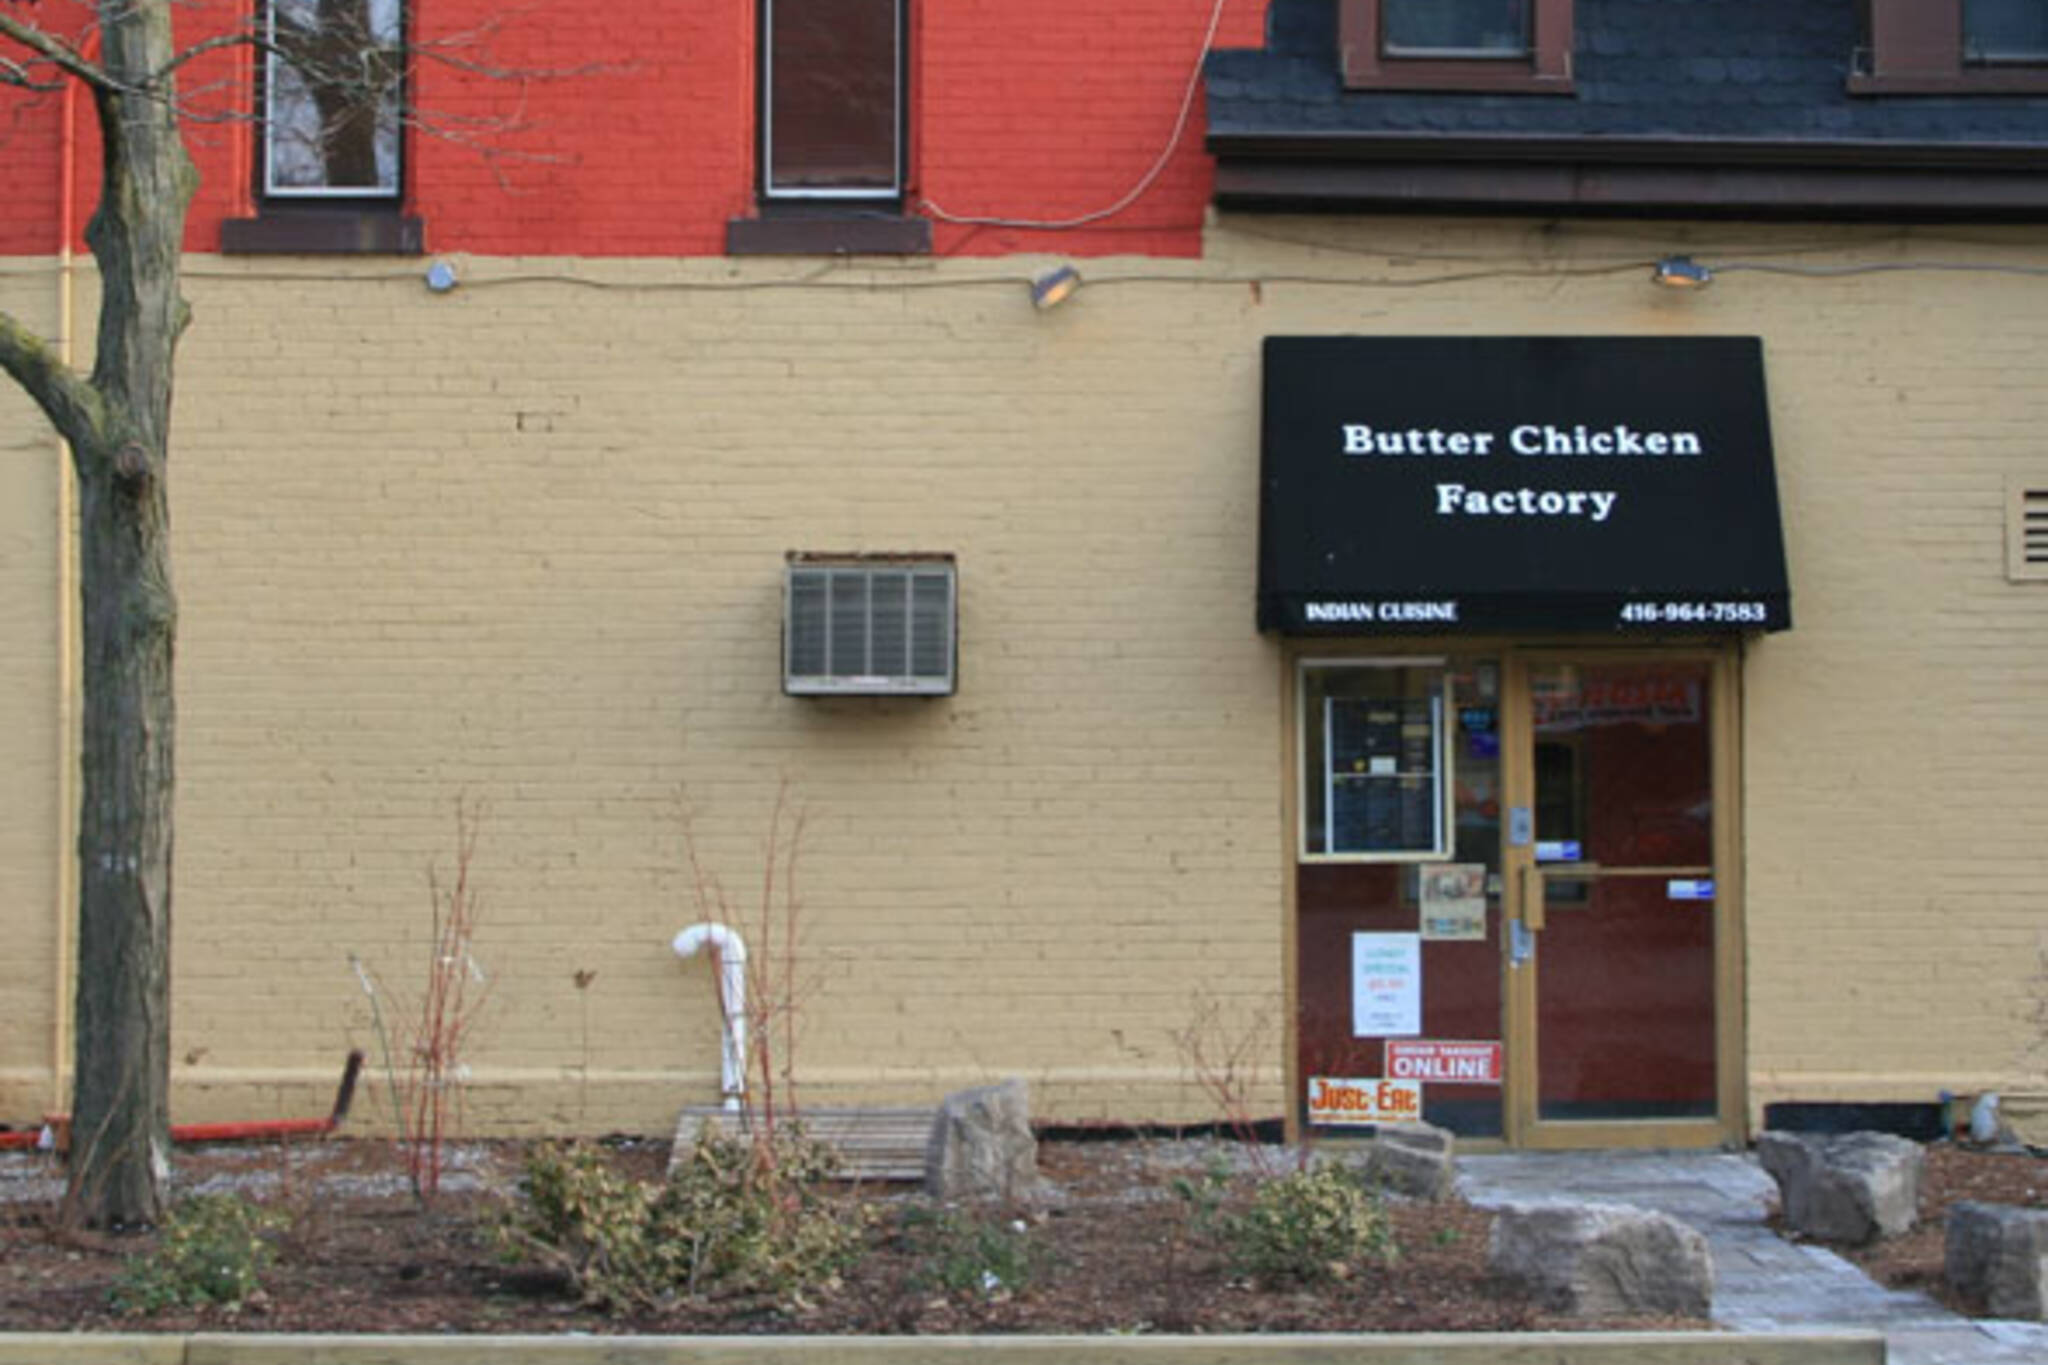 The Butter Chicken Factory